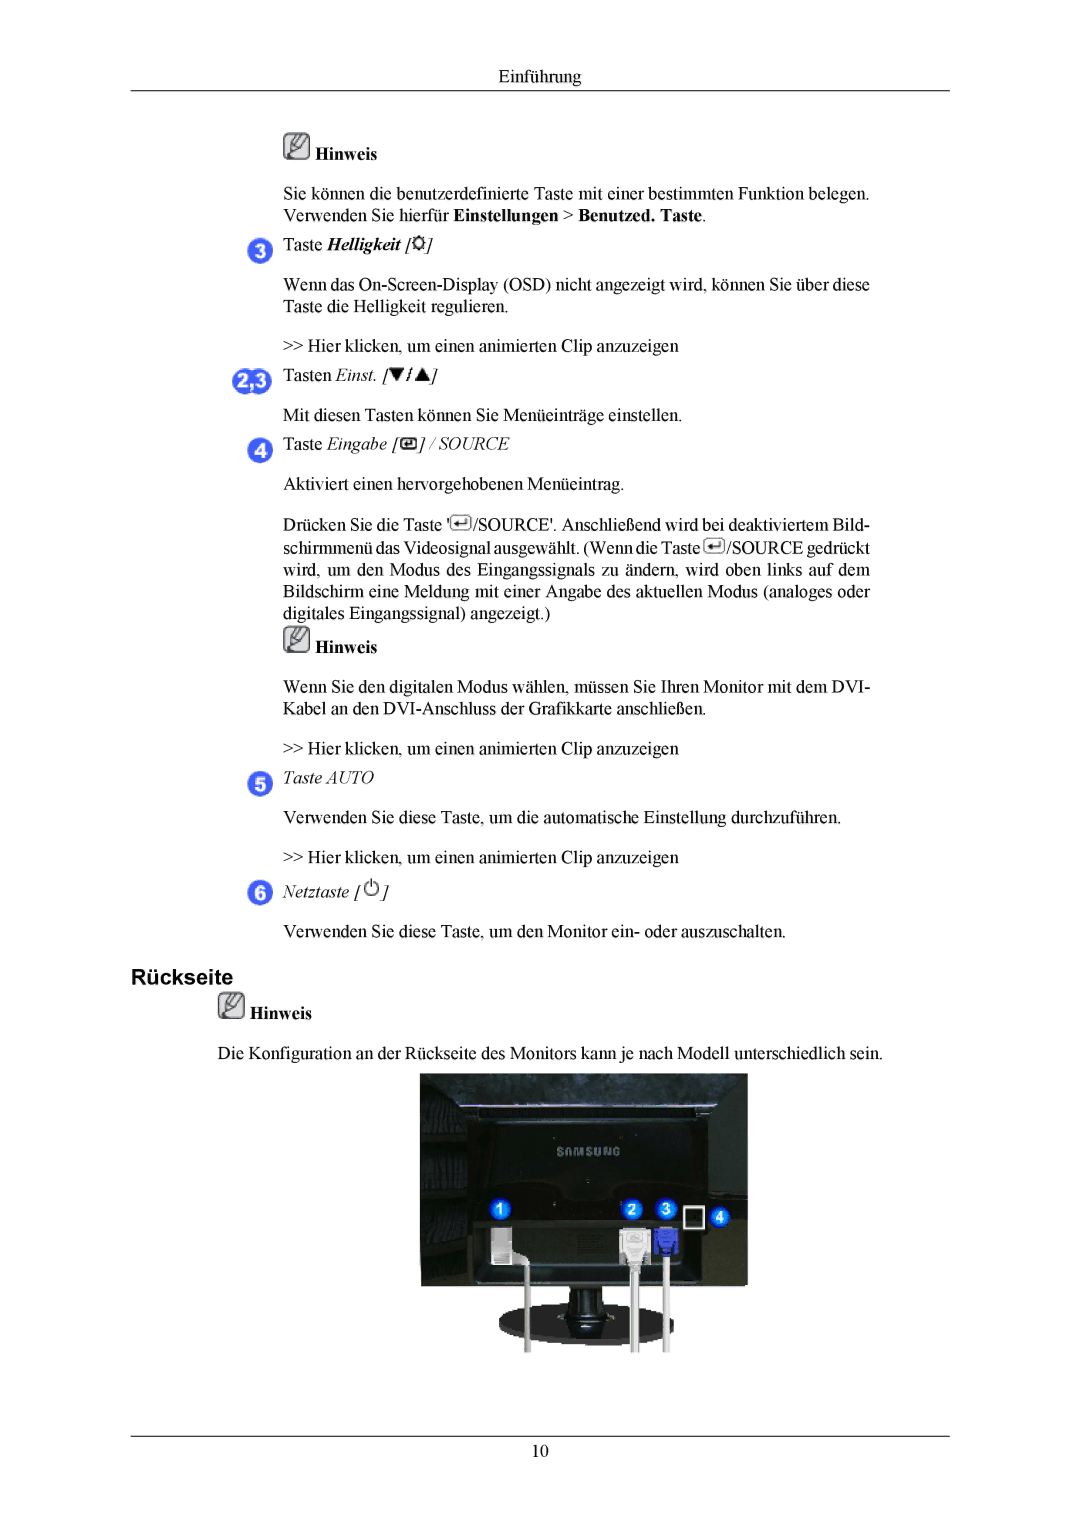 Samsung LS20AQWJFV/EDC manual Rückseite, Taste Eingabe / Source, Netztaste 